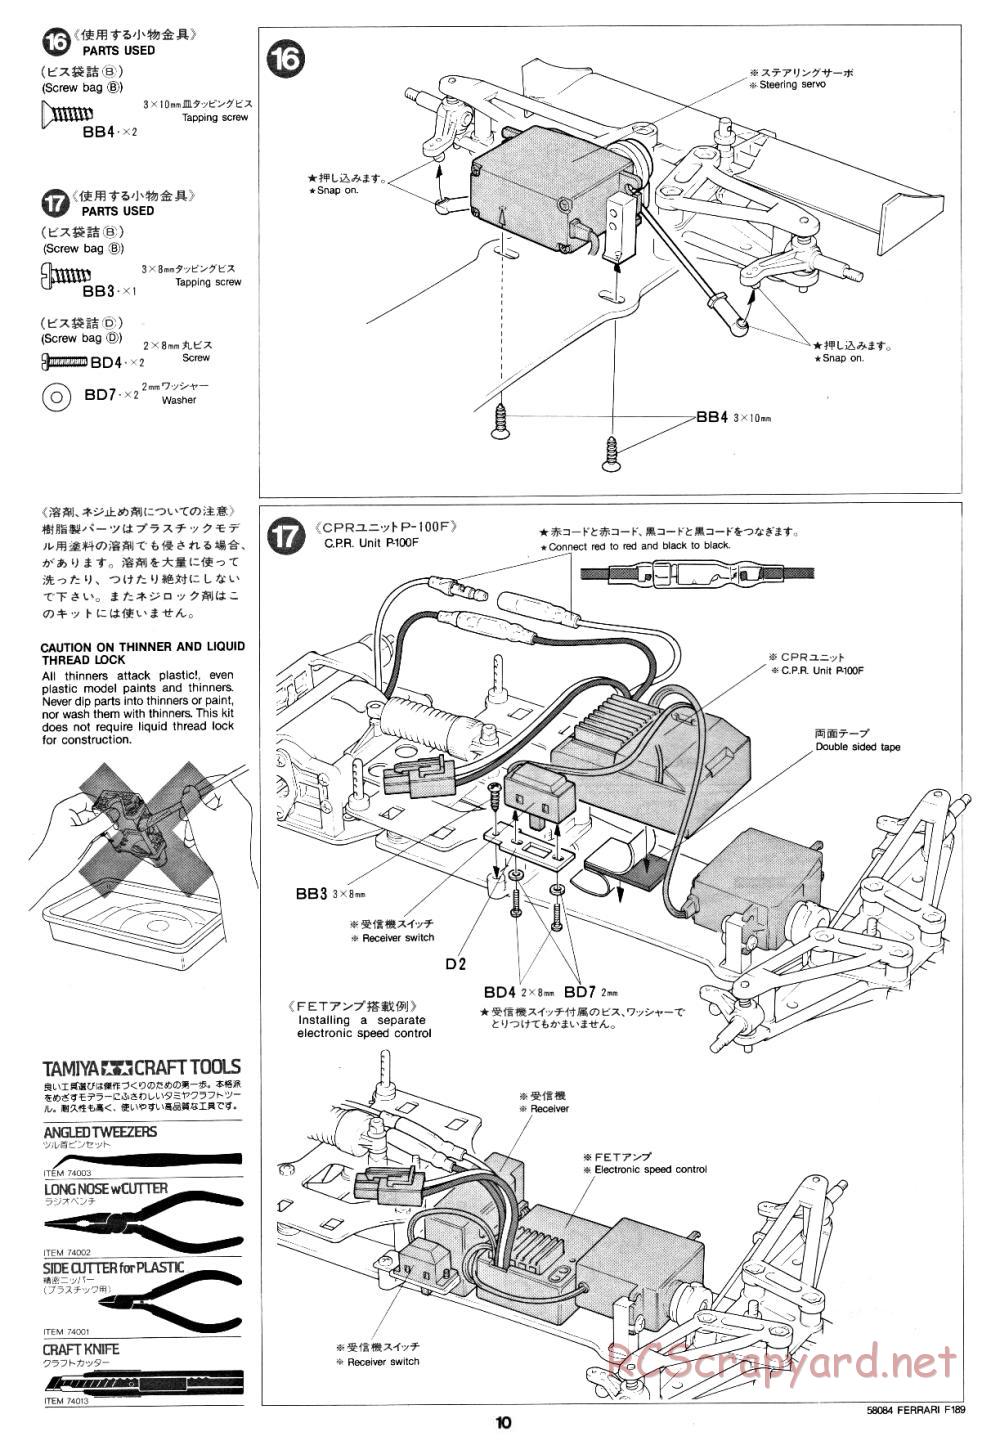 Tamiya - Ferrari F189 Late Version - 58084 - Manual - Page 10